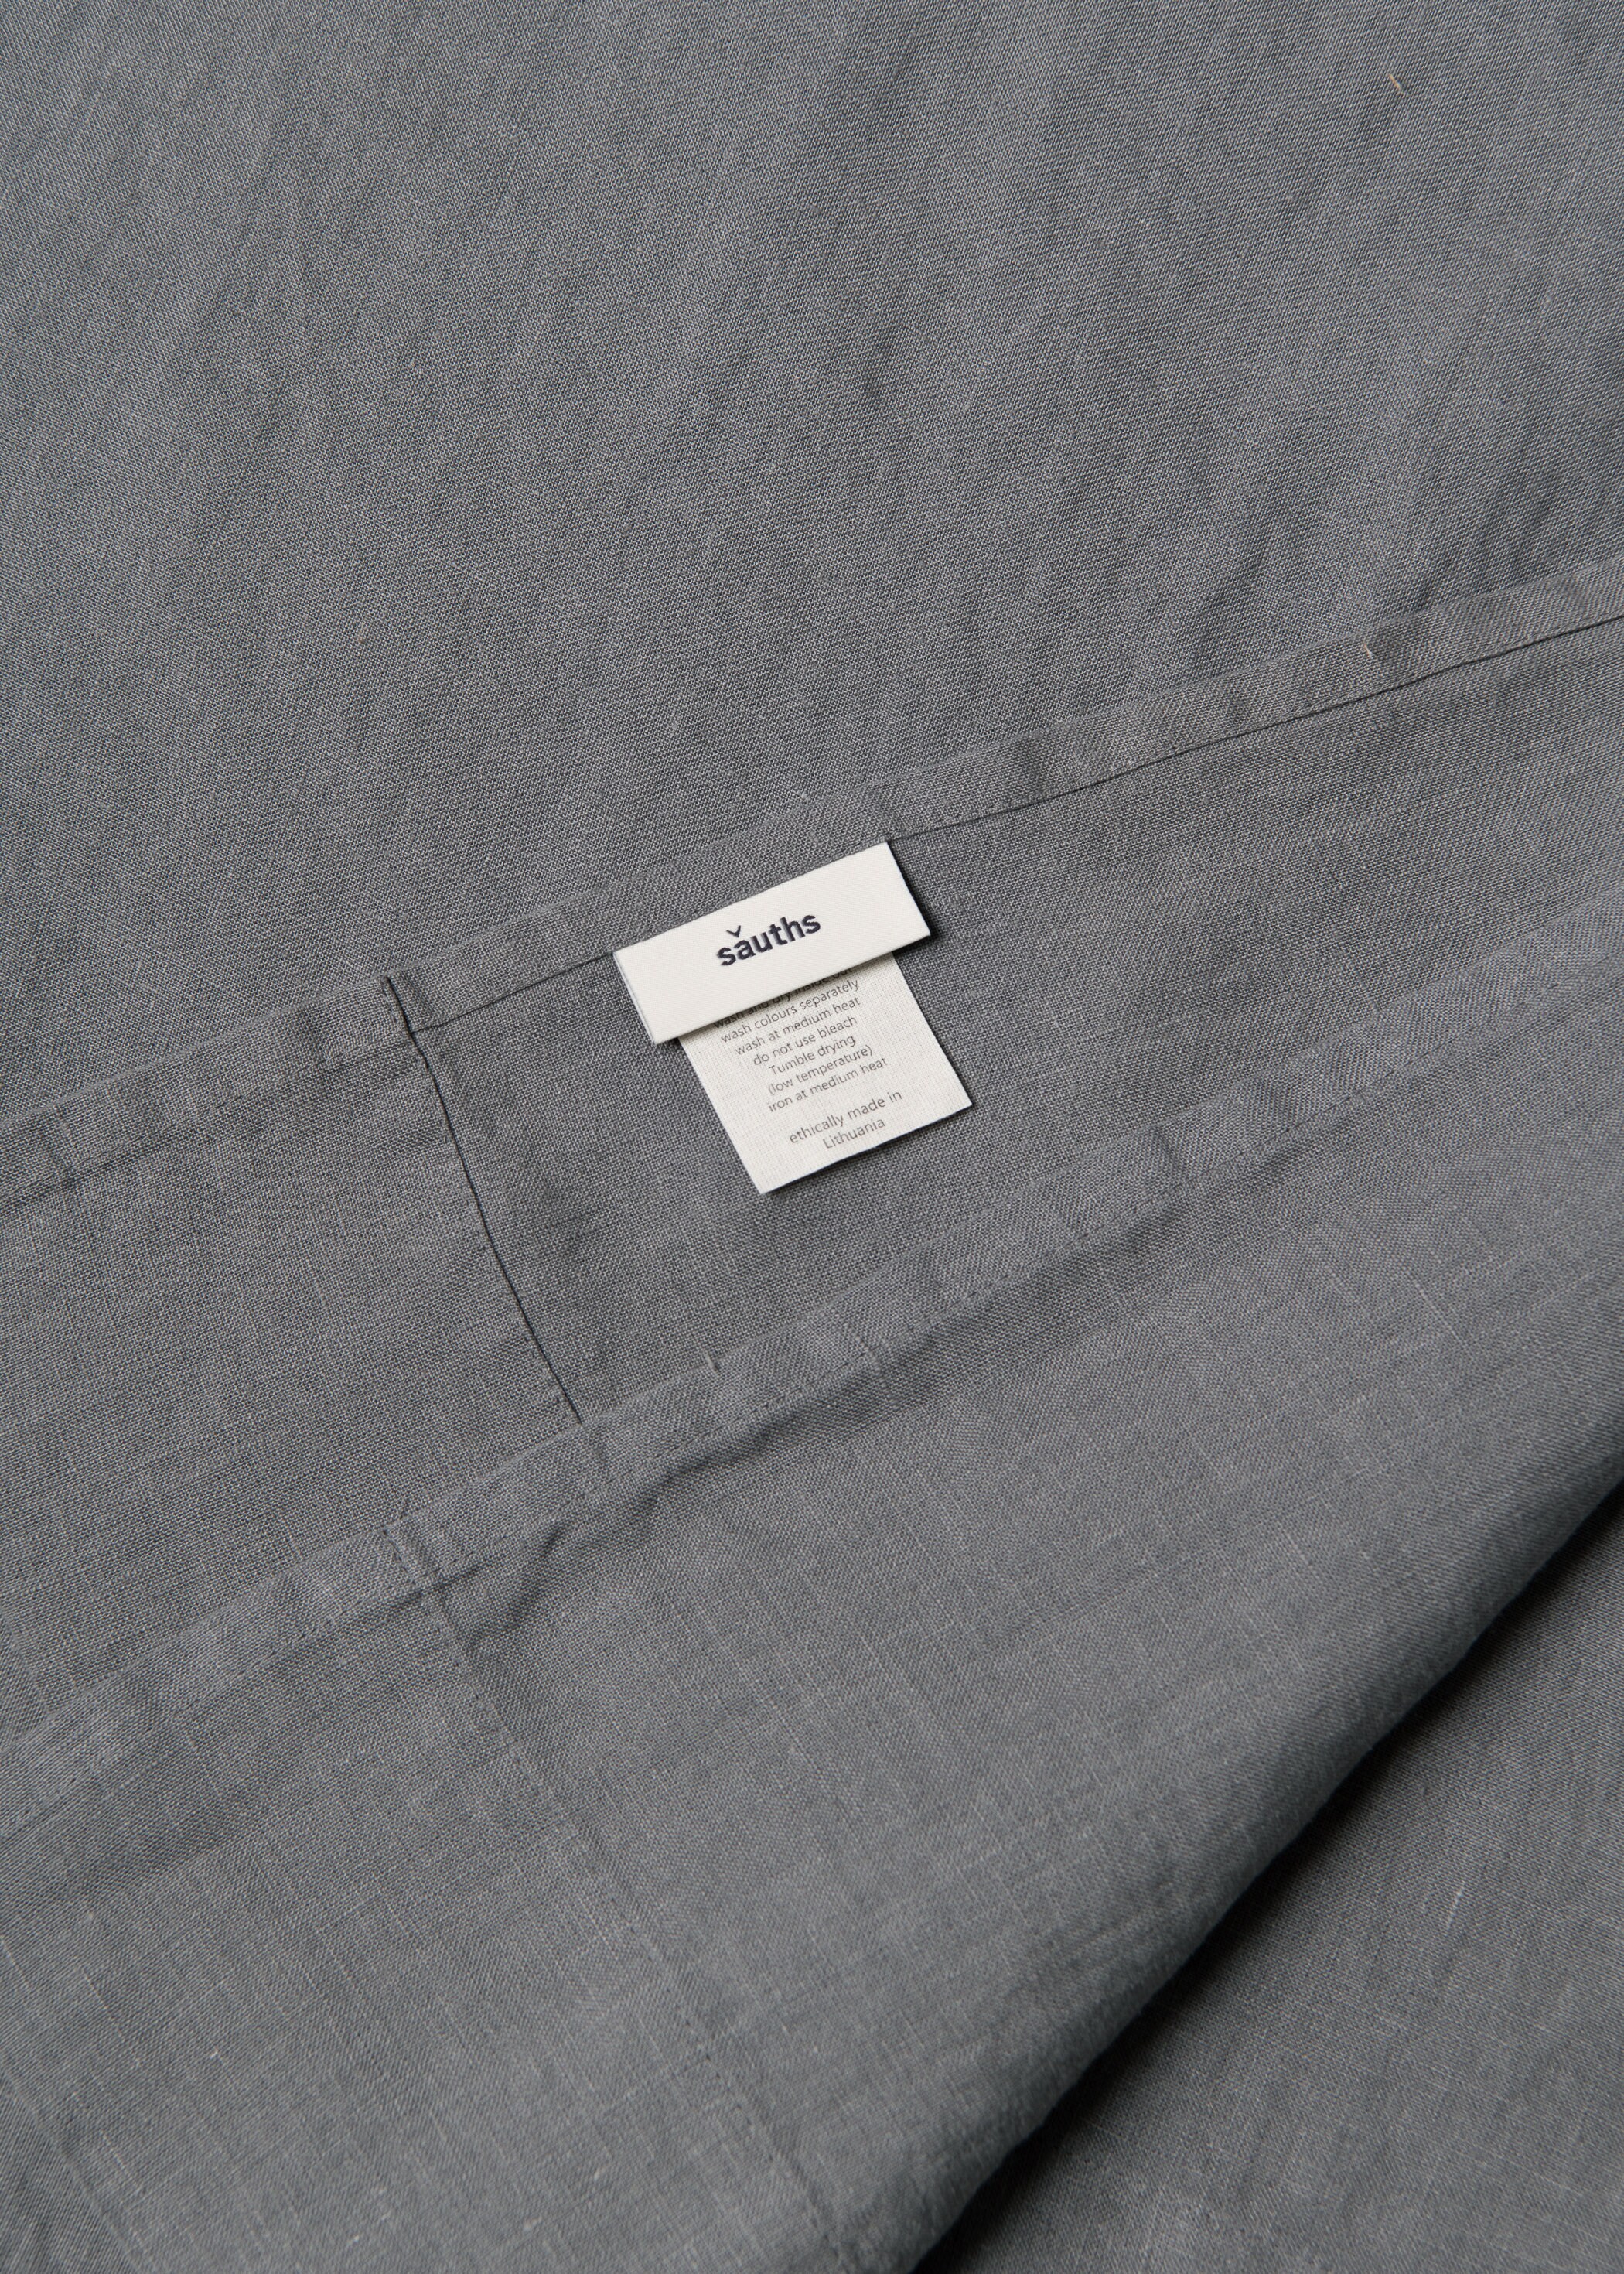 Noren Curtains Dark Gray Color. Japanese Linen Noren Panel. | Etsy